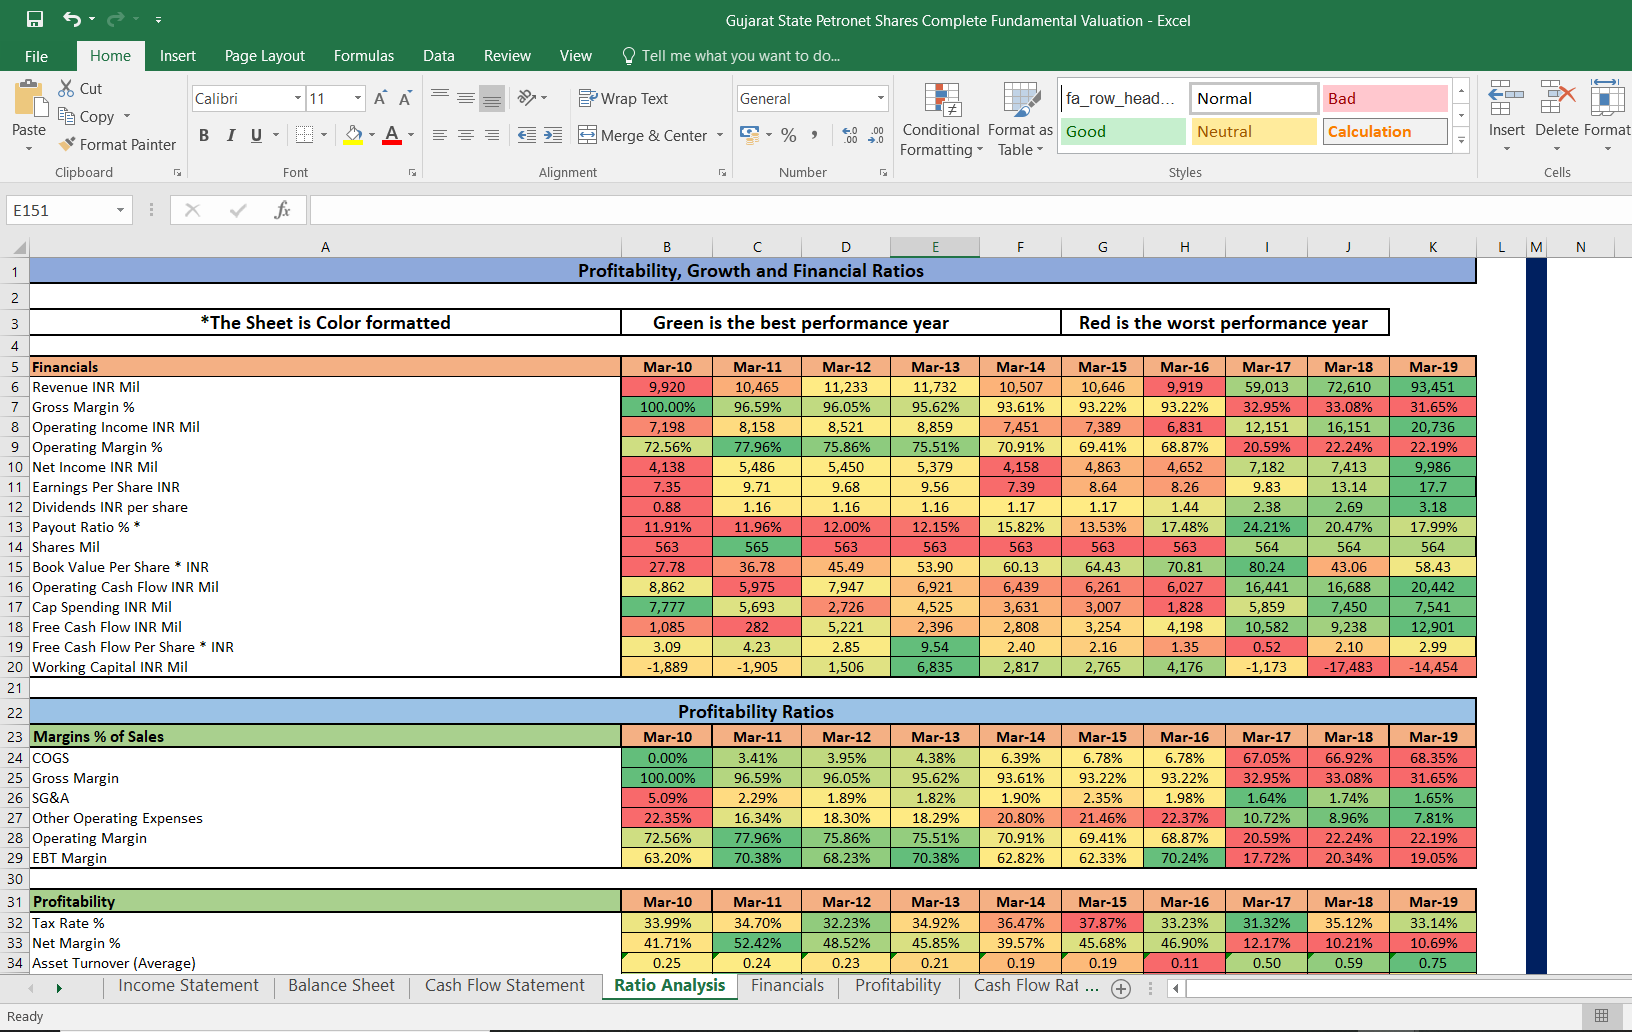 Bharati Airtel Fundamental Analysis and Financial Ratios In Fundamental Analysis Excel Template Within Fundamental Analysis Excel Template